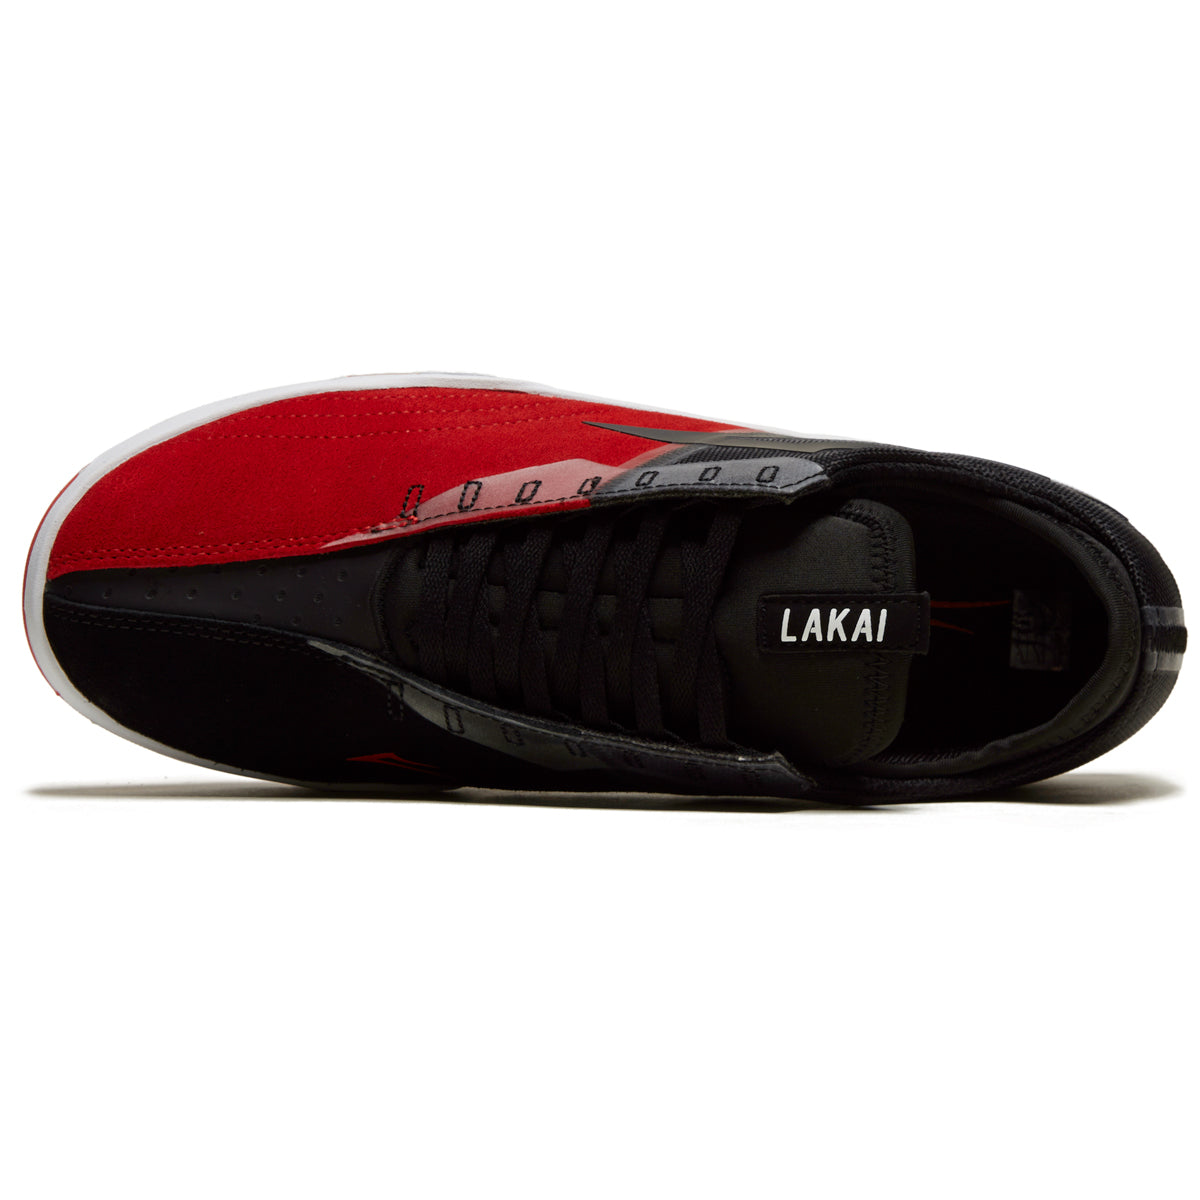 Lakai MOD Shoes - Black/Red Suede image 3